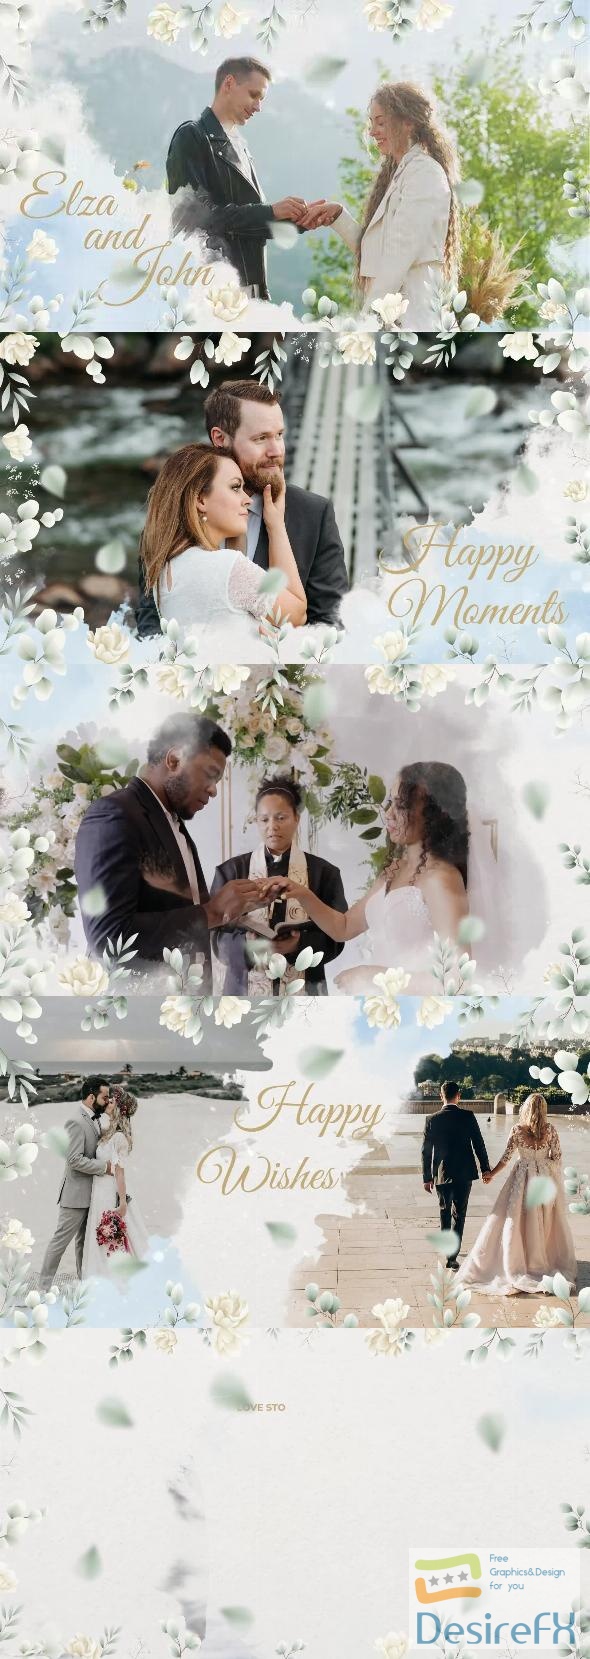 Videohive Wedding Day Slideshow 39296628